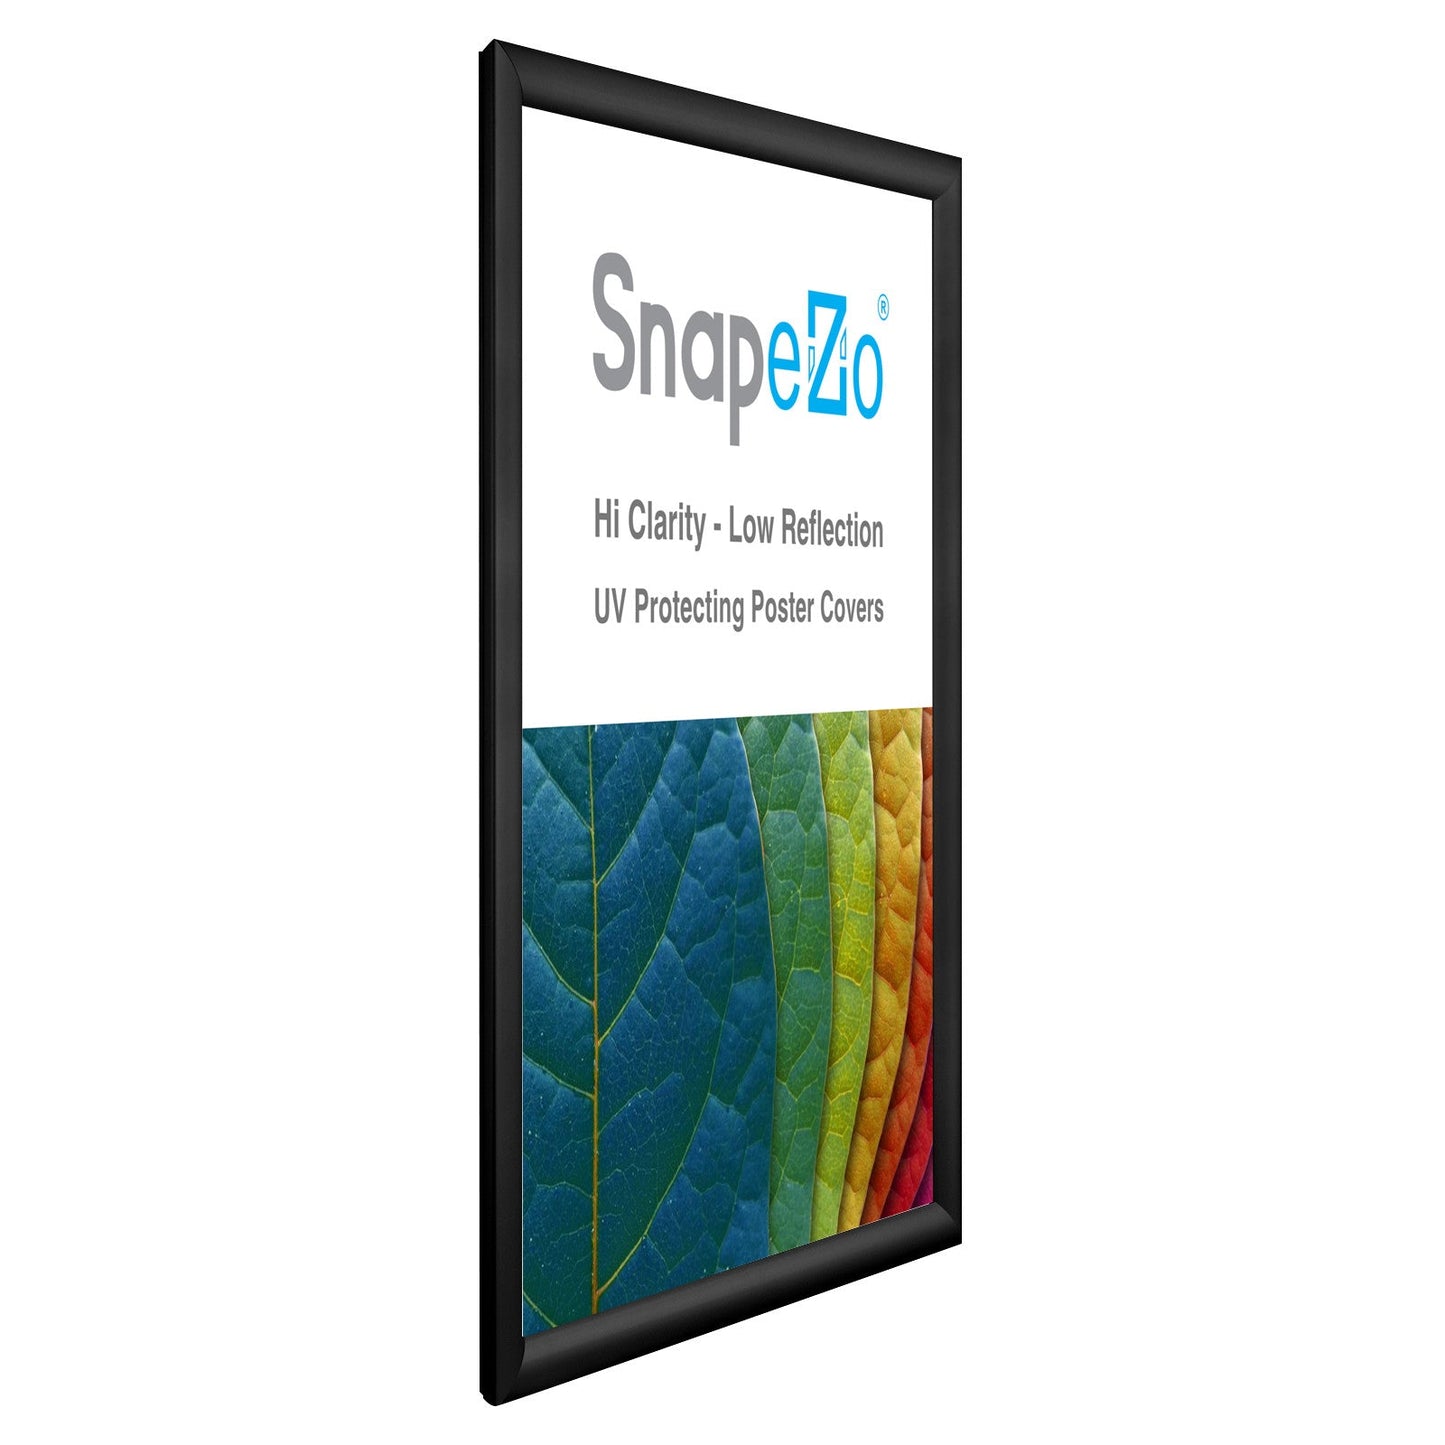 22x28 Black SnapeZo® Snap Frame - 1.2" Profile